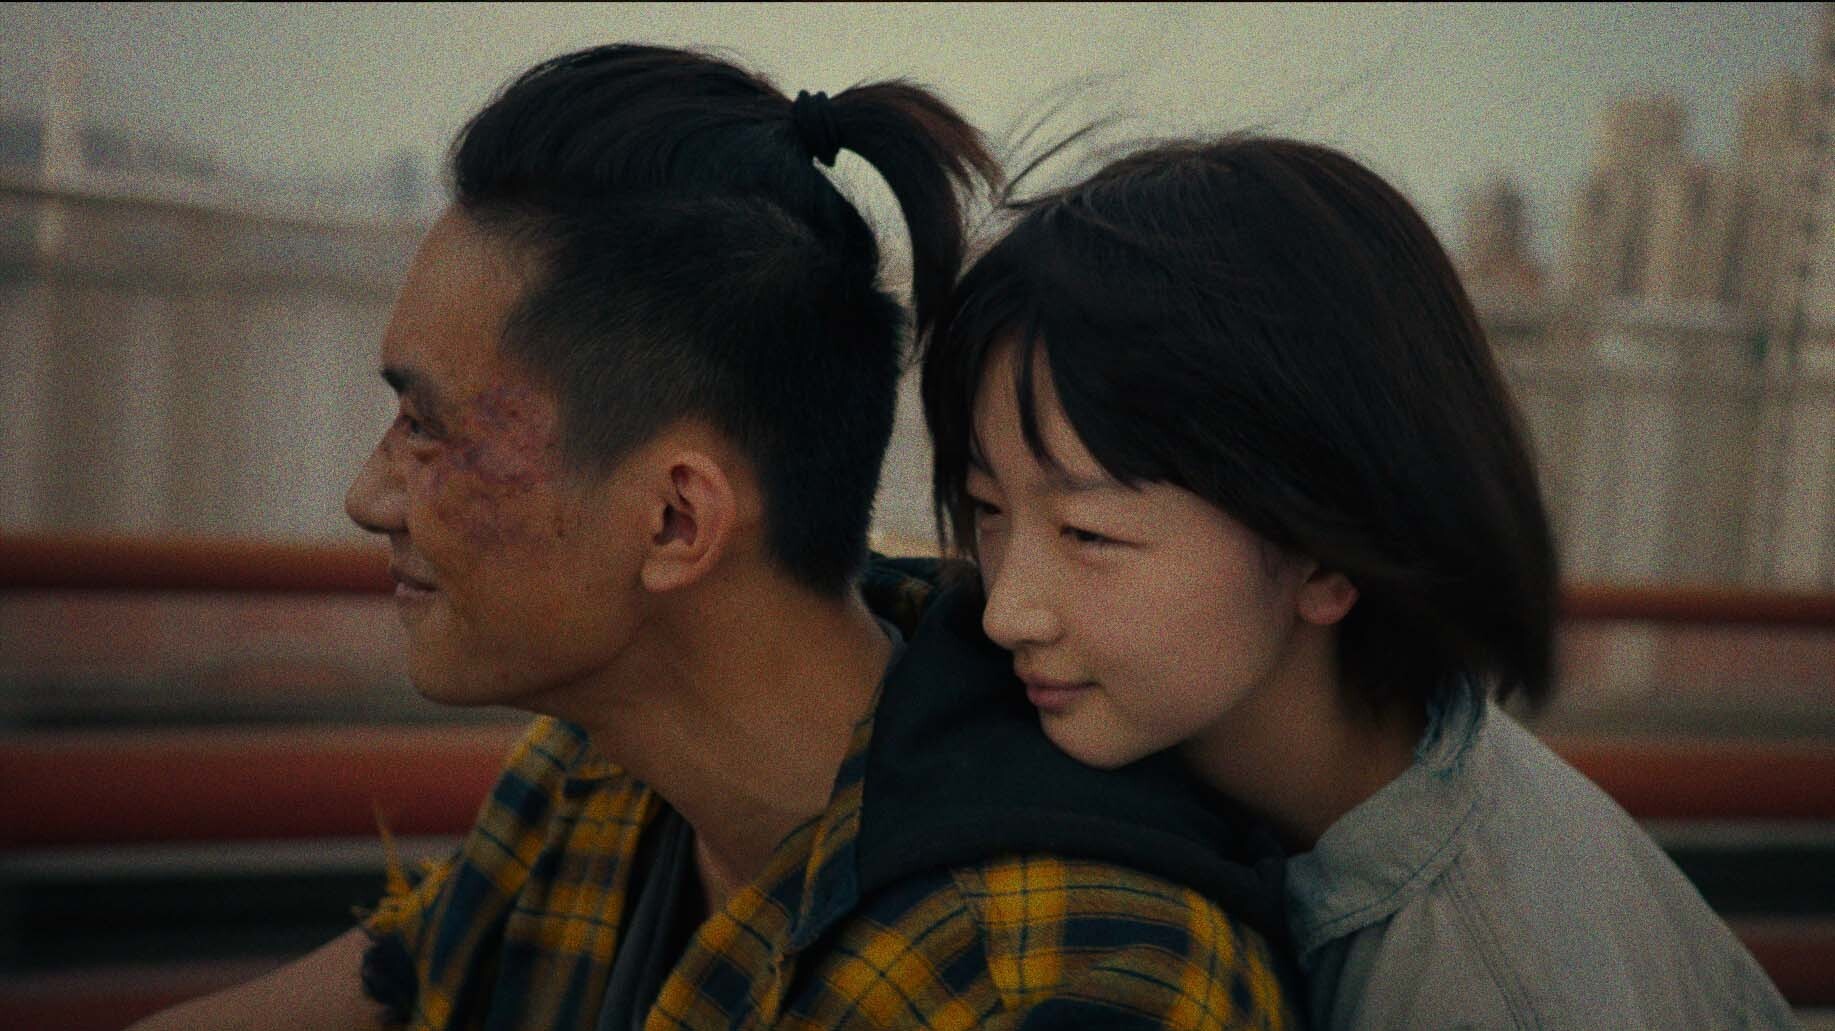 Parasite' wins big, Chinese films shine at 14th Asian Film Awards - CGTN